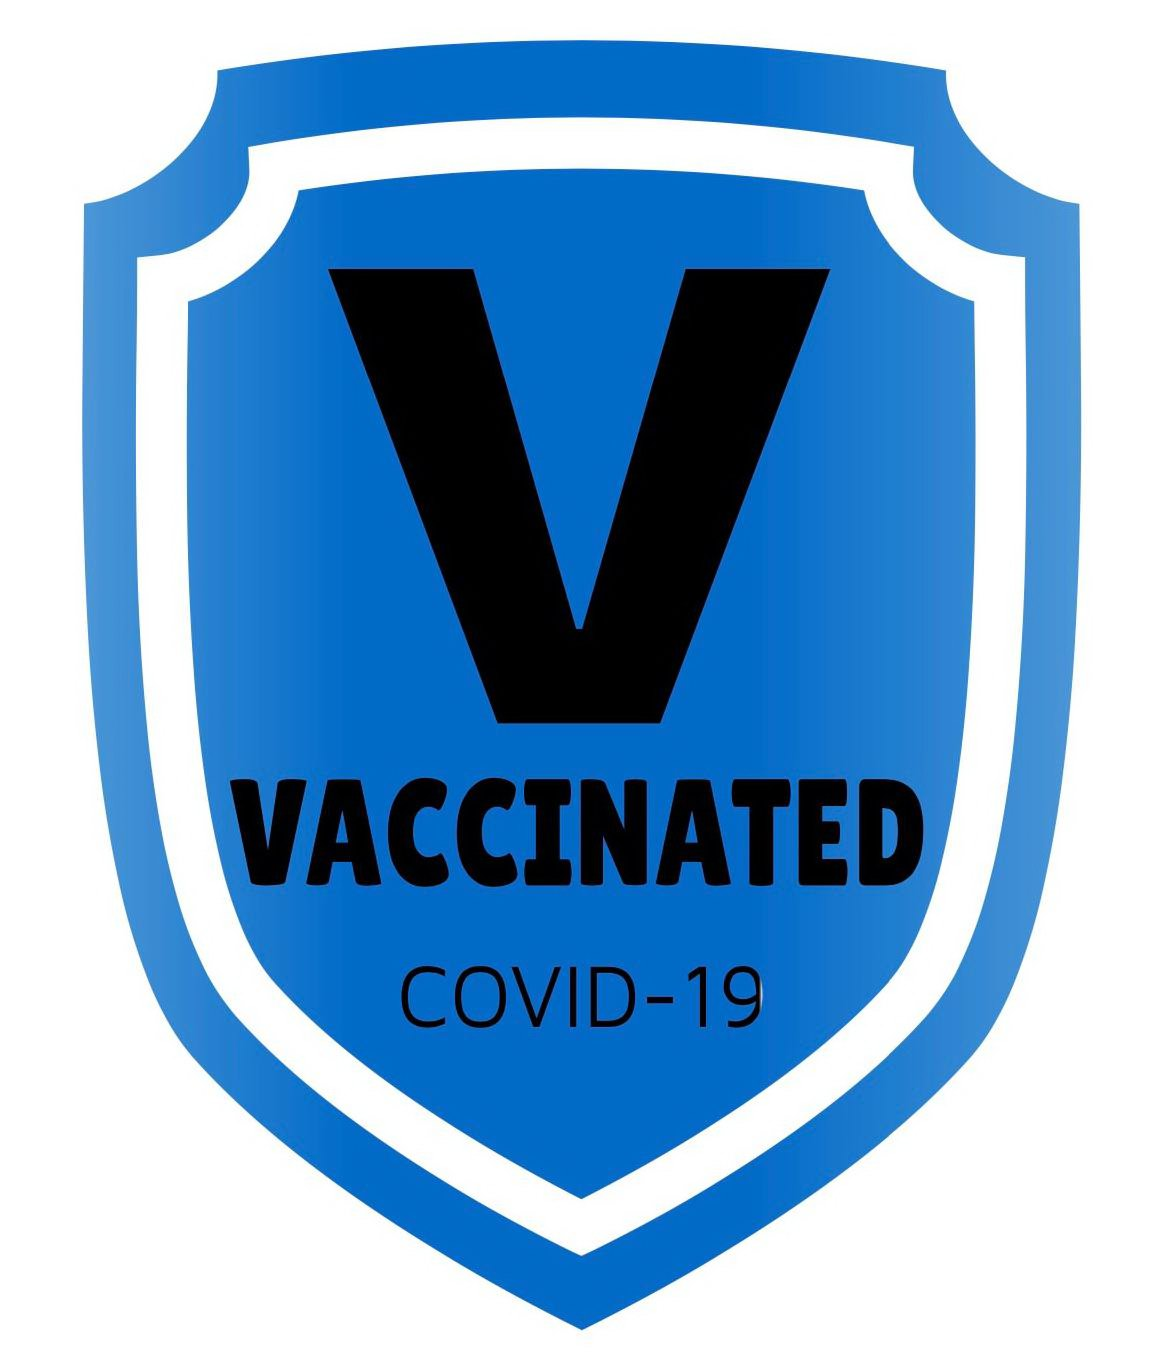  VACCINATED COVID-19